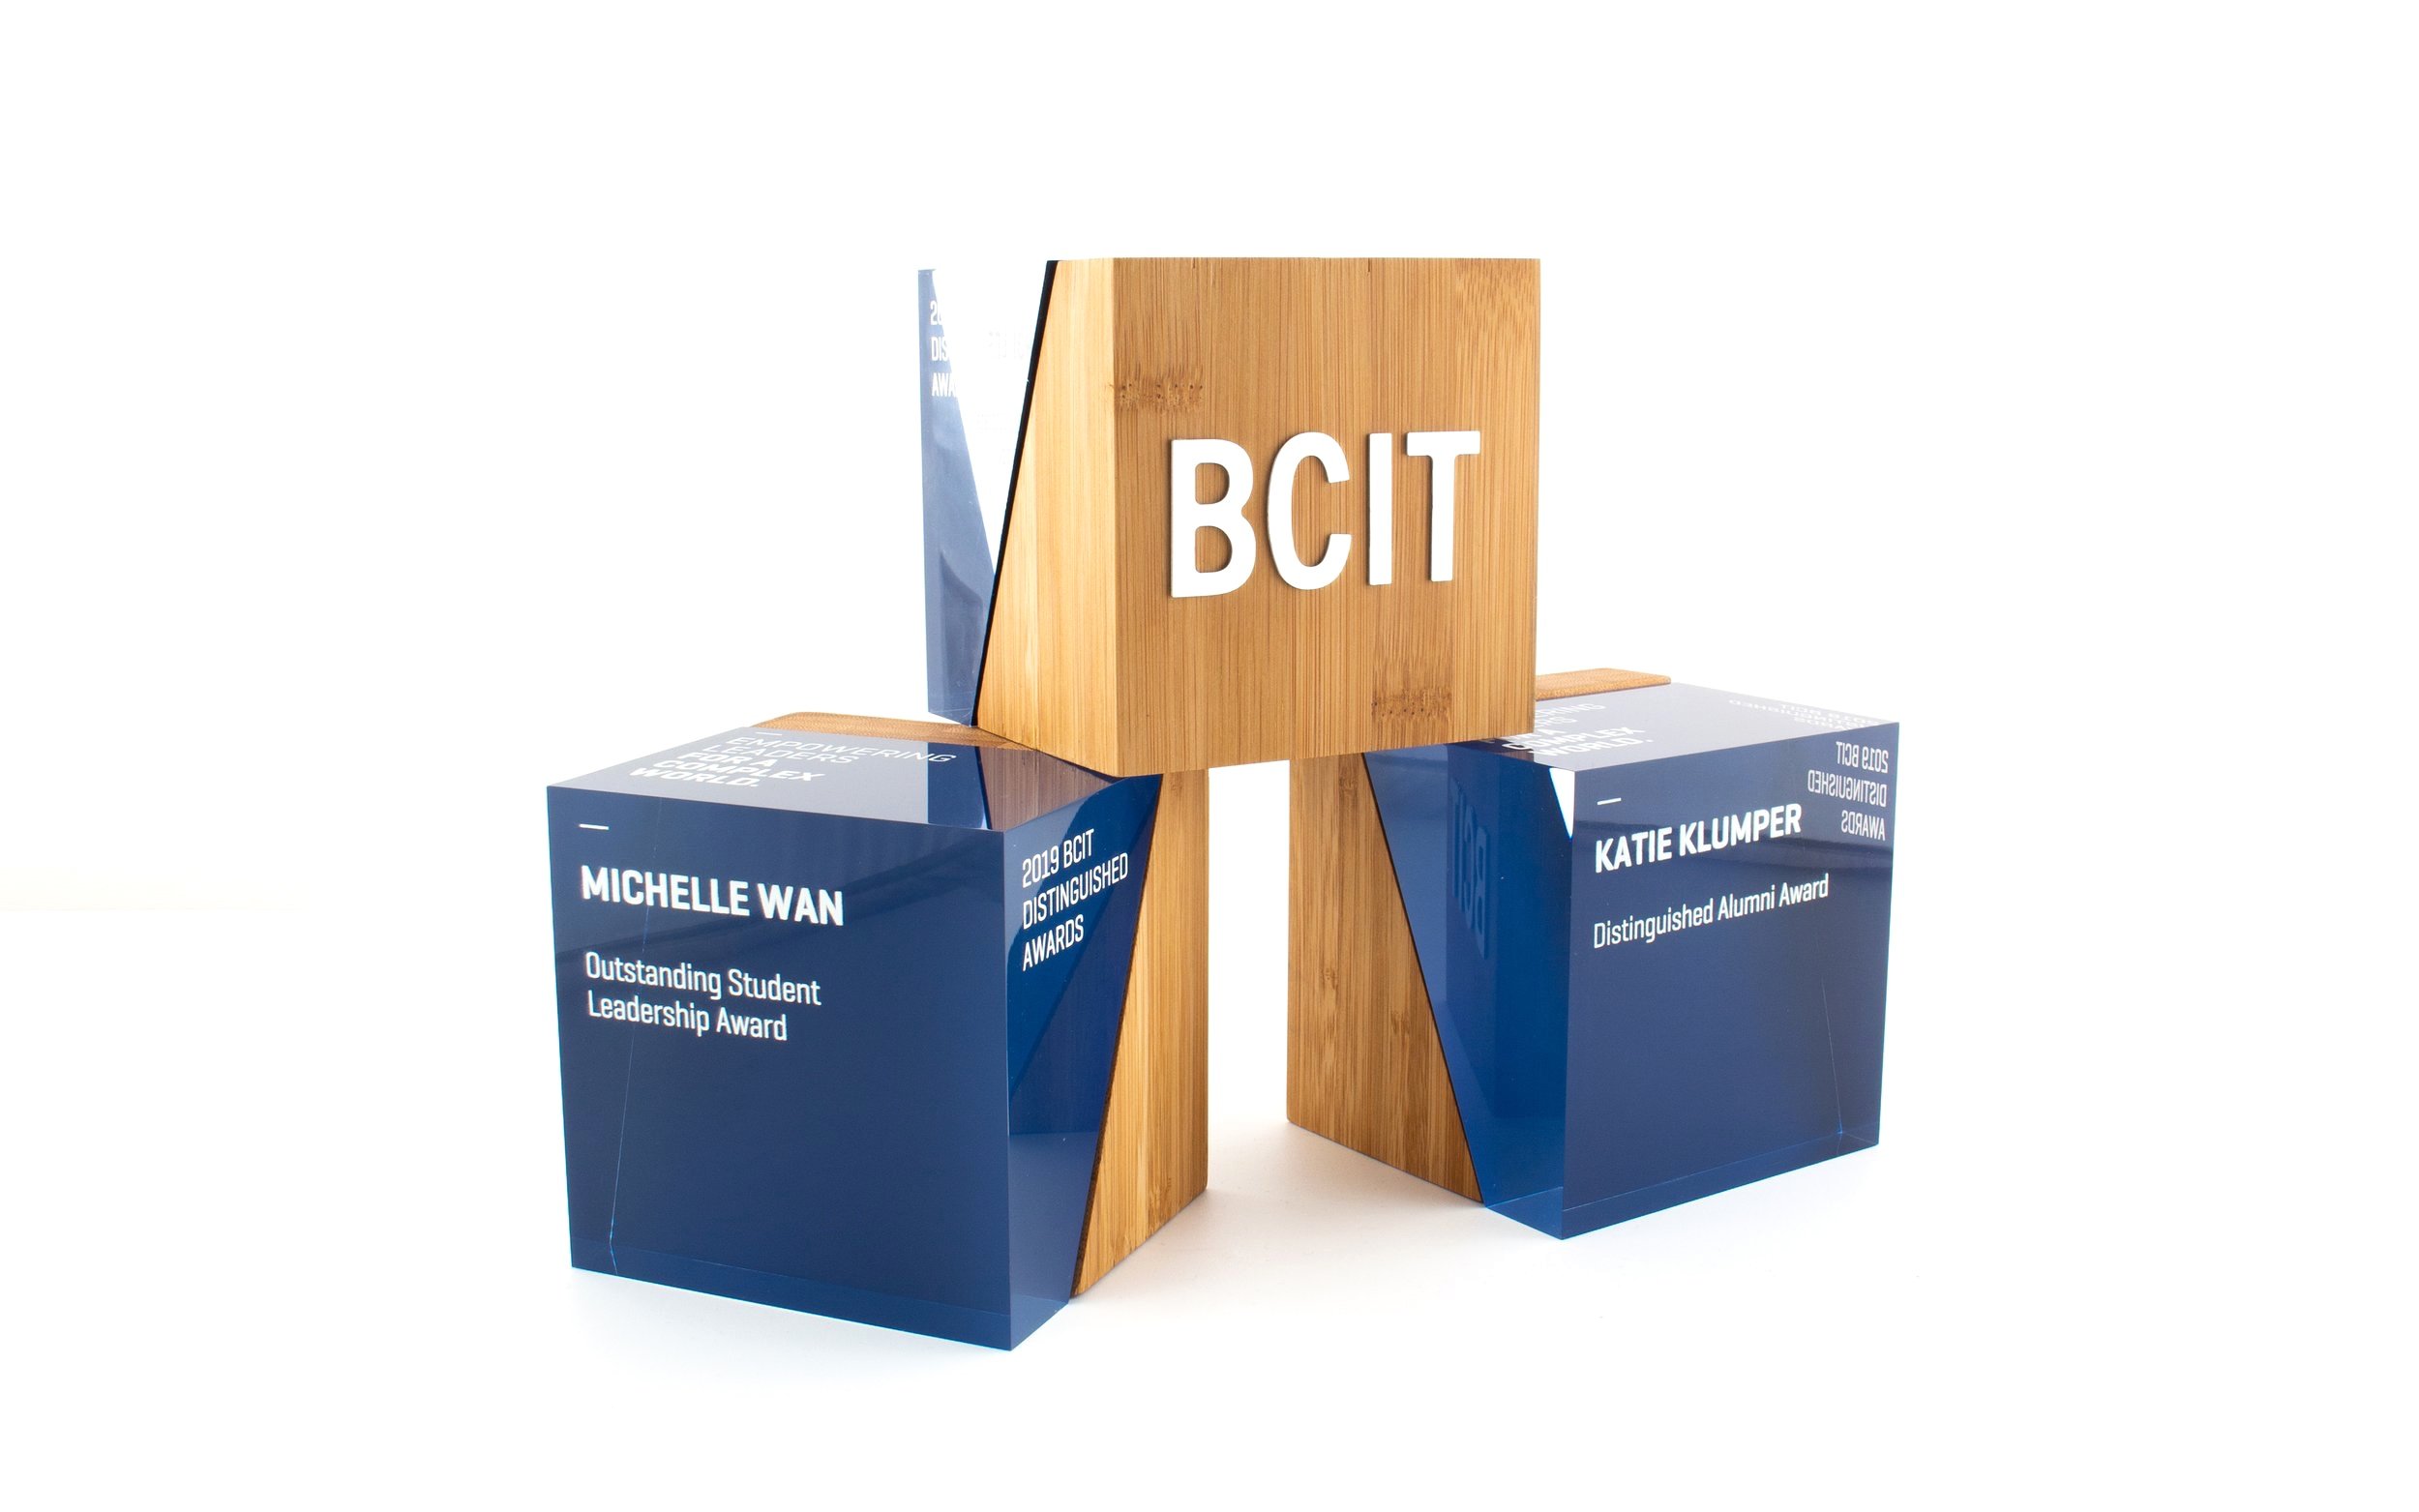 BCIT alumni awards outstanding leadership